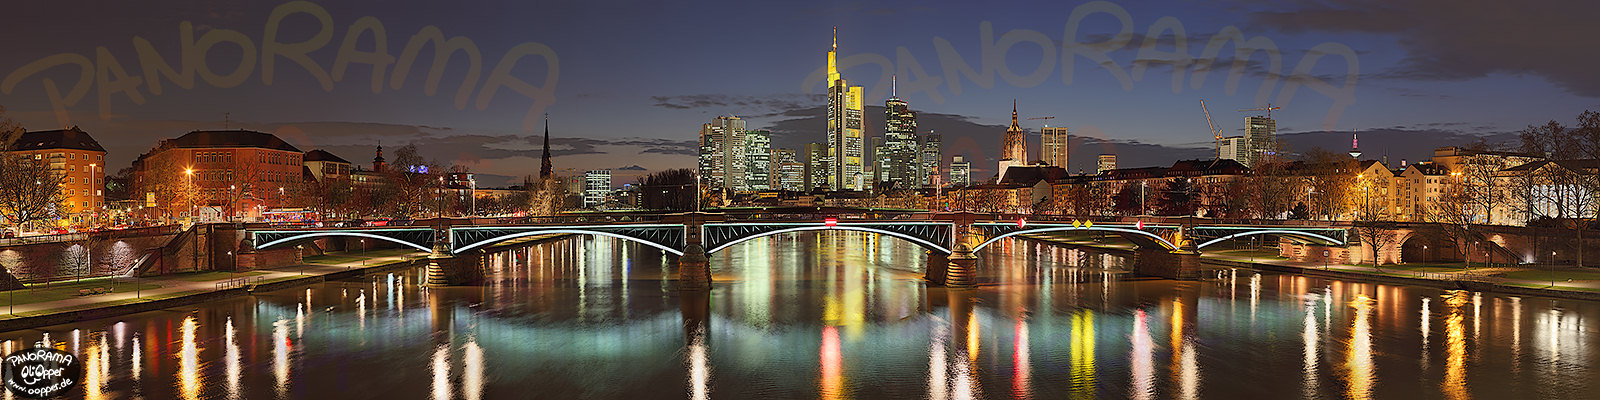 Frankfurt Skyline - p402 - (c) by Oliver Opper